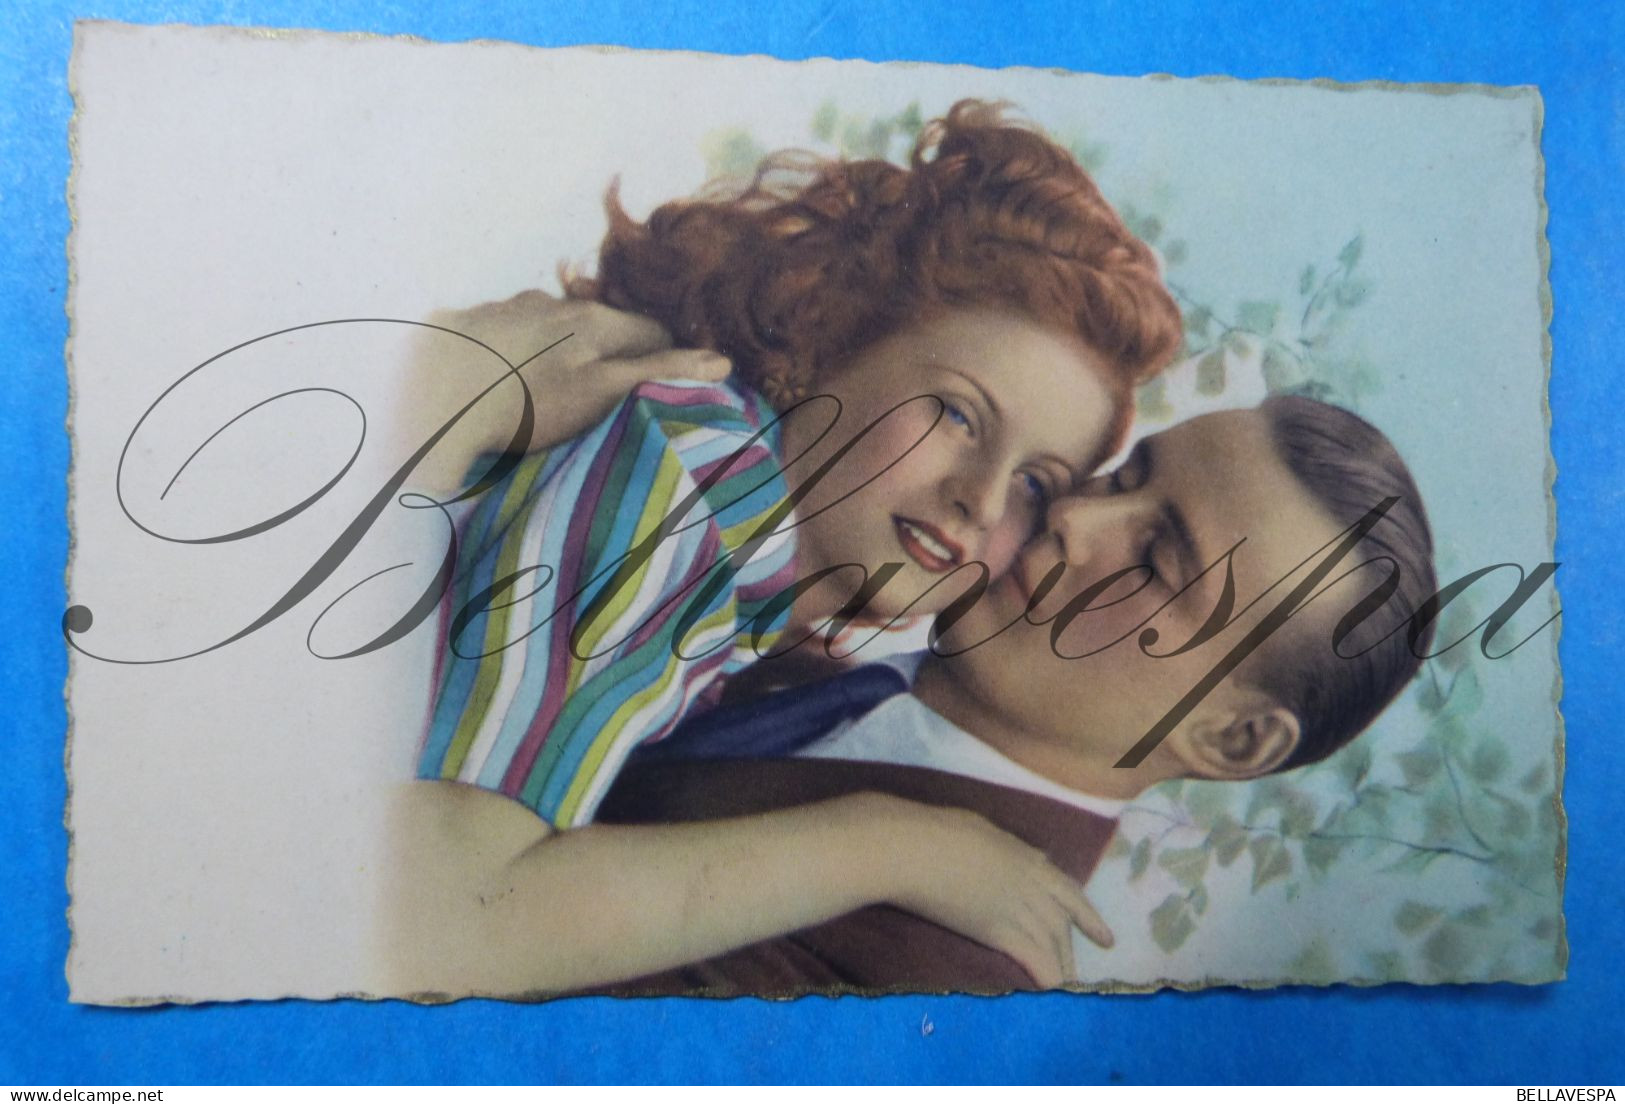 Koppels  Coeurs Amour Liefde Lot X 80 Cpa/ Postkaarten - Rebecq